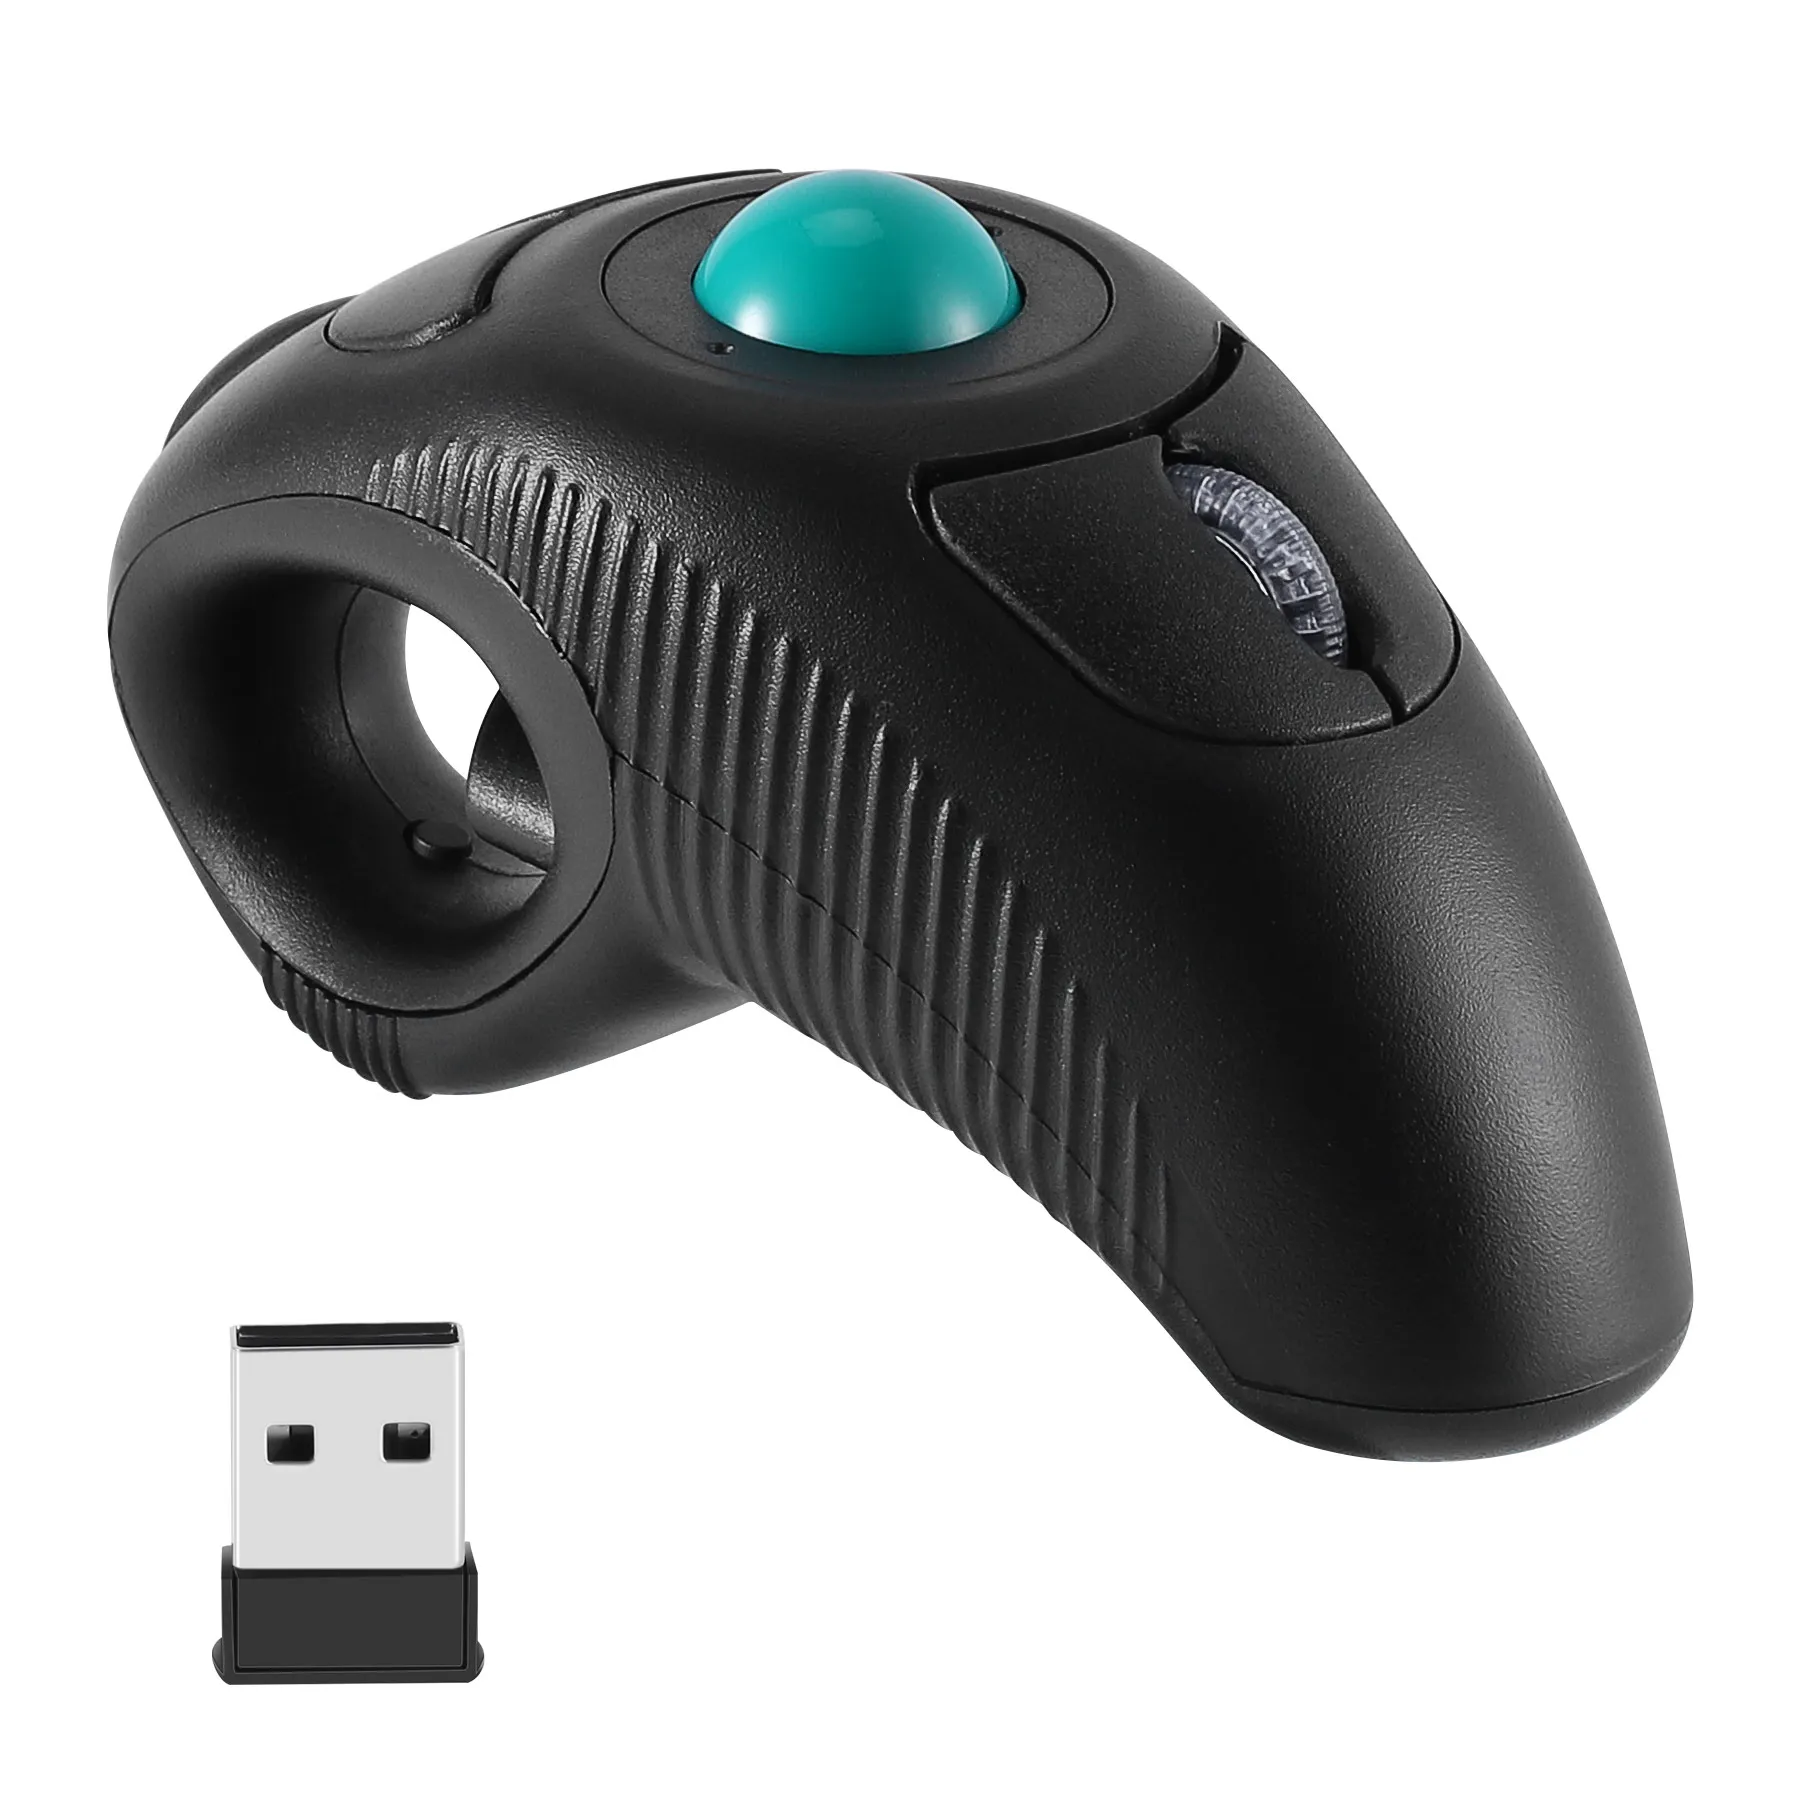 

Digital 2.4GHz Wireless Trackball Mouse Ergonomic Design Finger Using Track Ball Mouse Handheld Optical Mice for Android TV PC